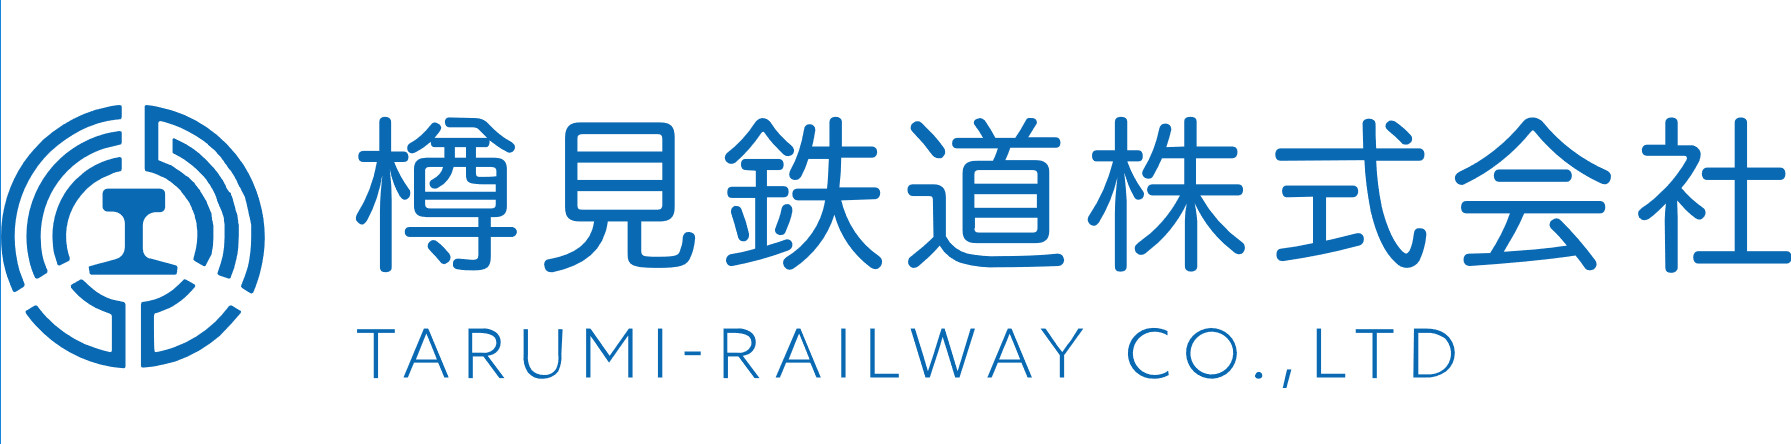 Transportation Company - Tarumi Railway - Railroad